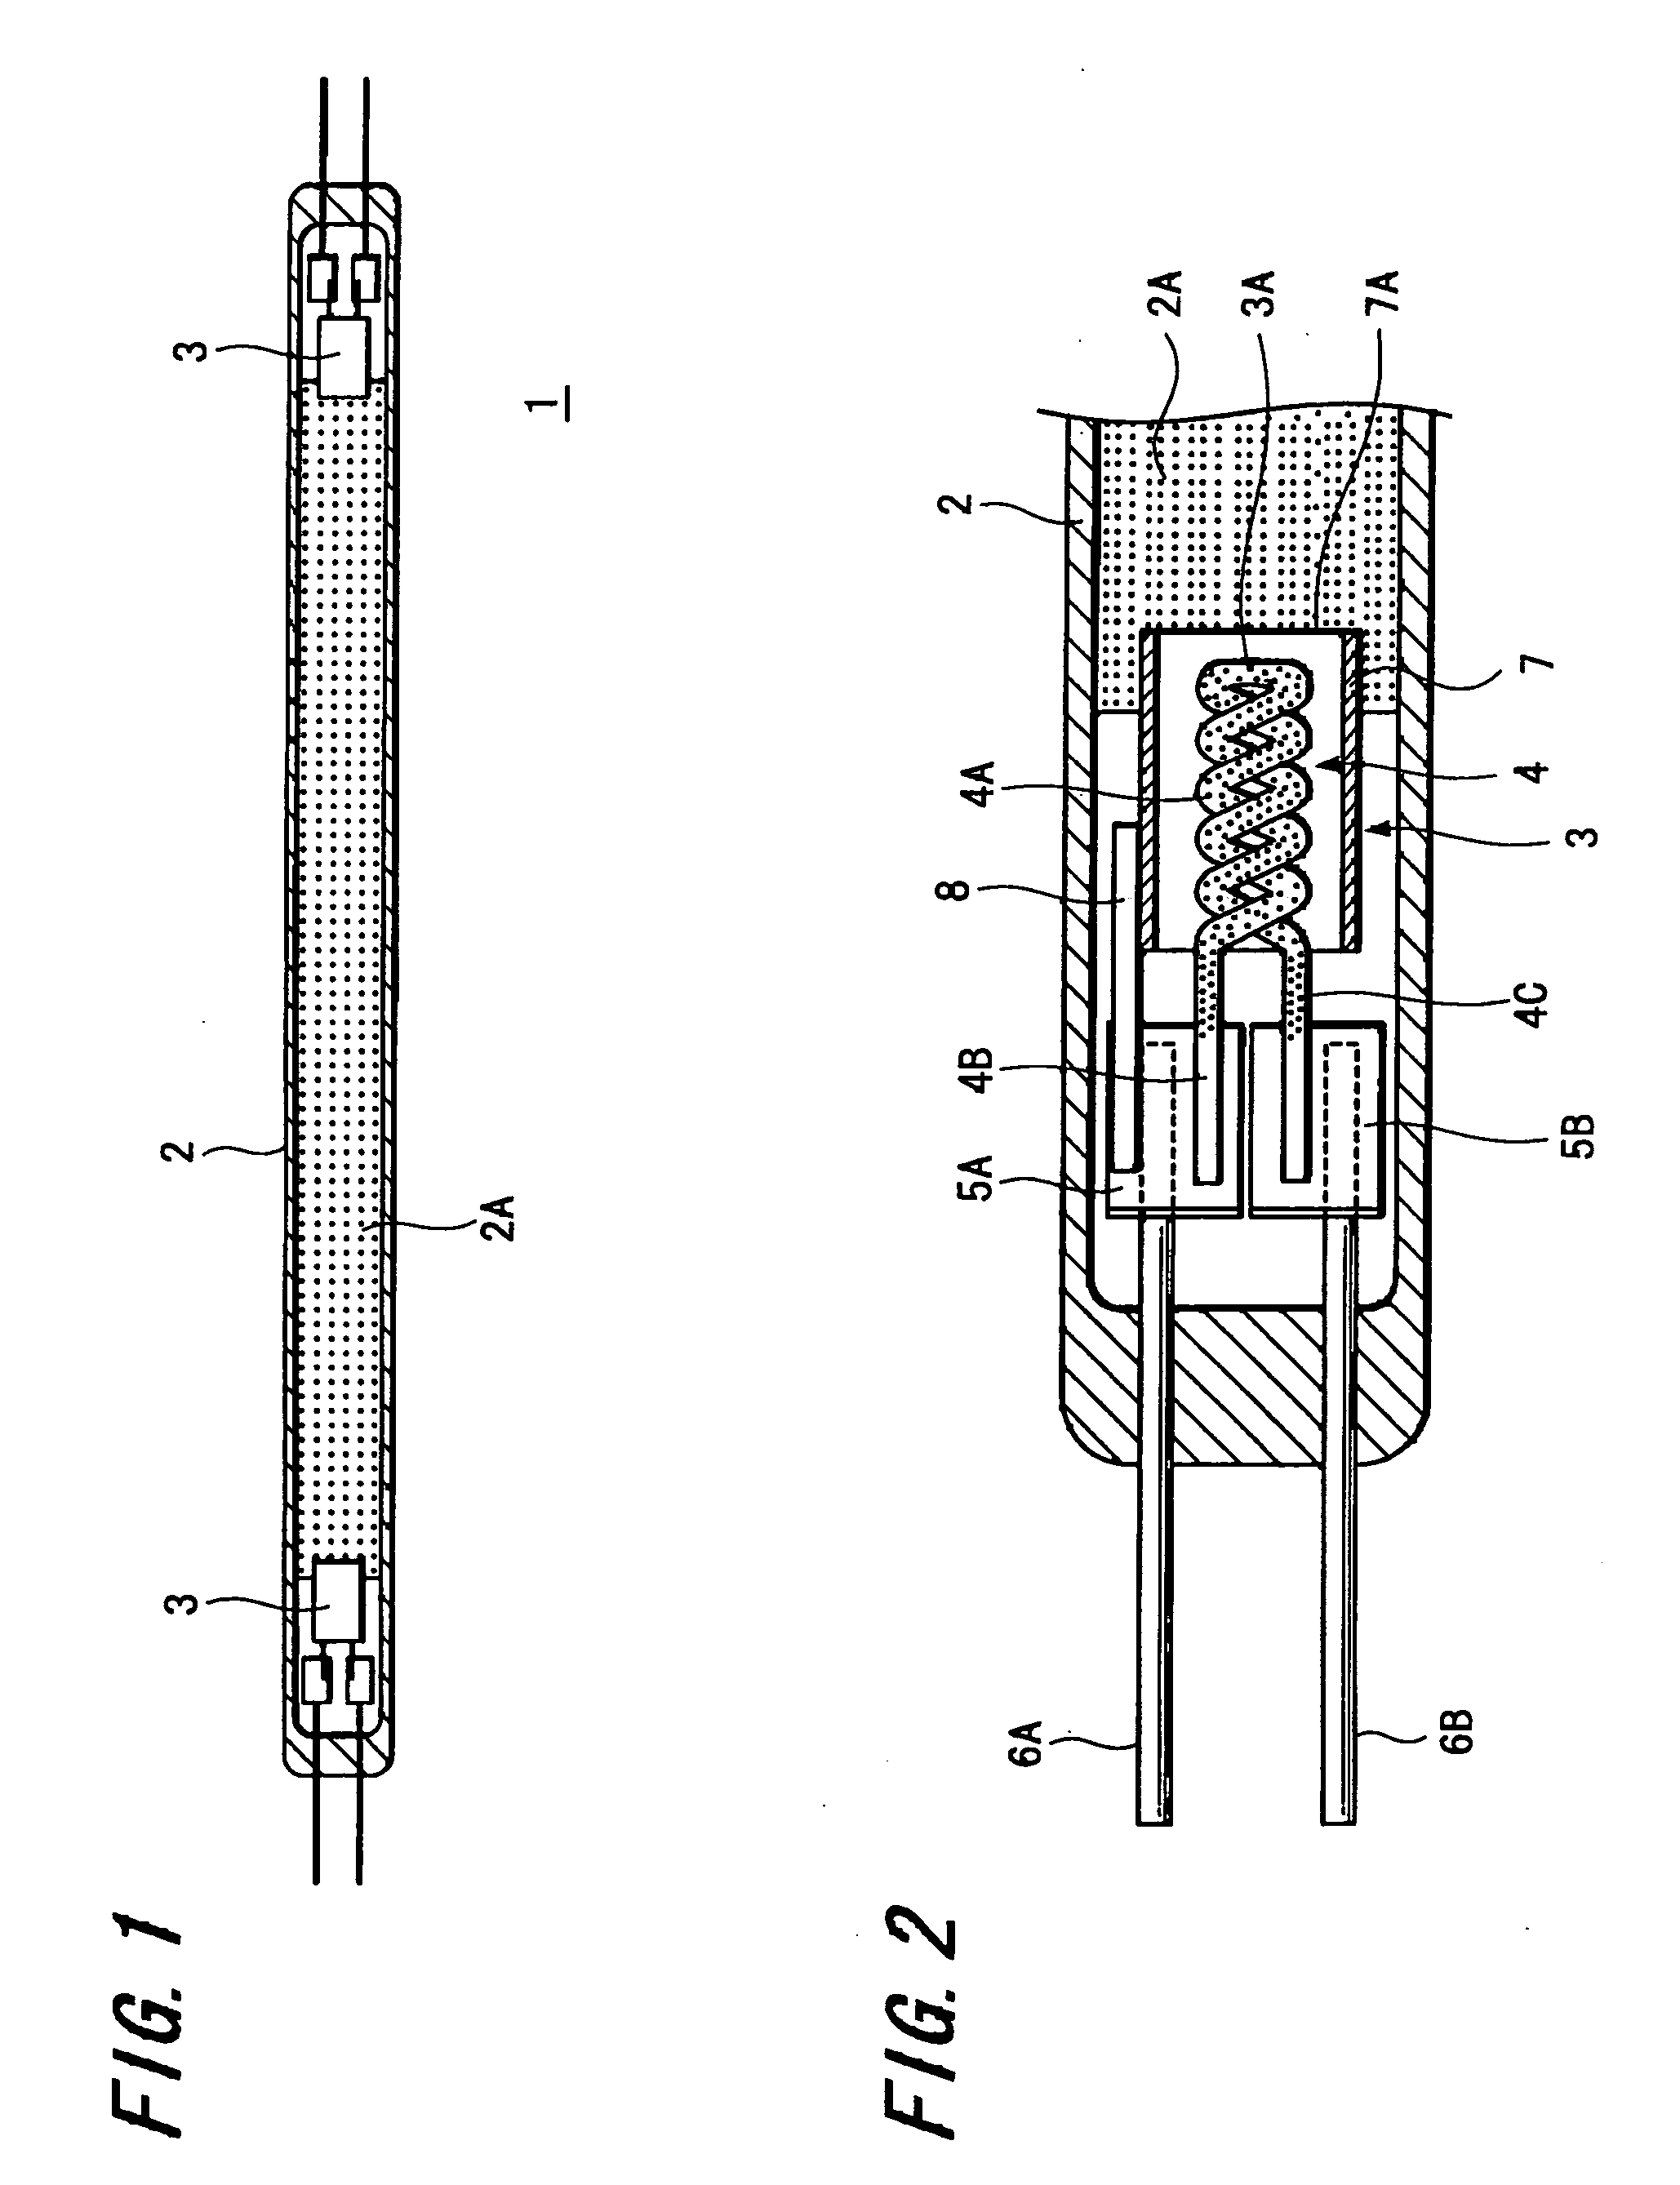 Discharge lamp and illumination apparatus